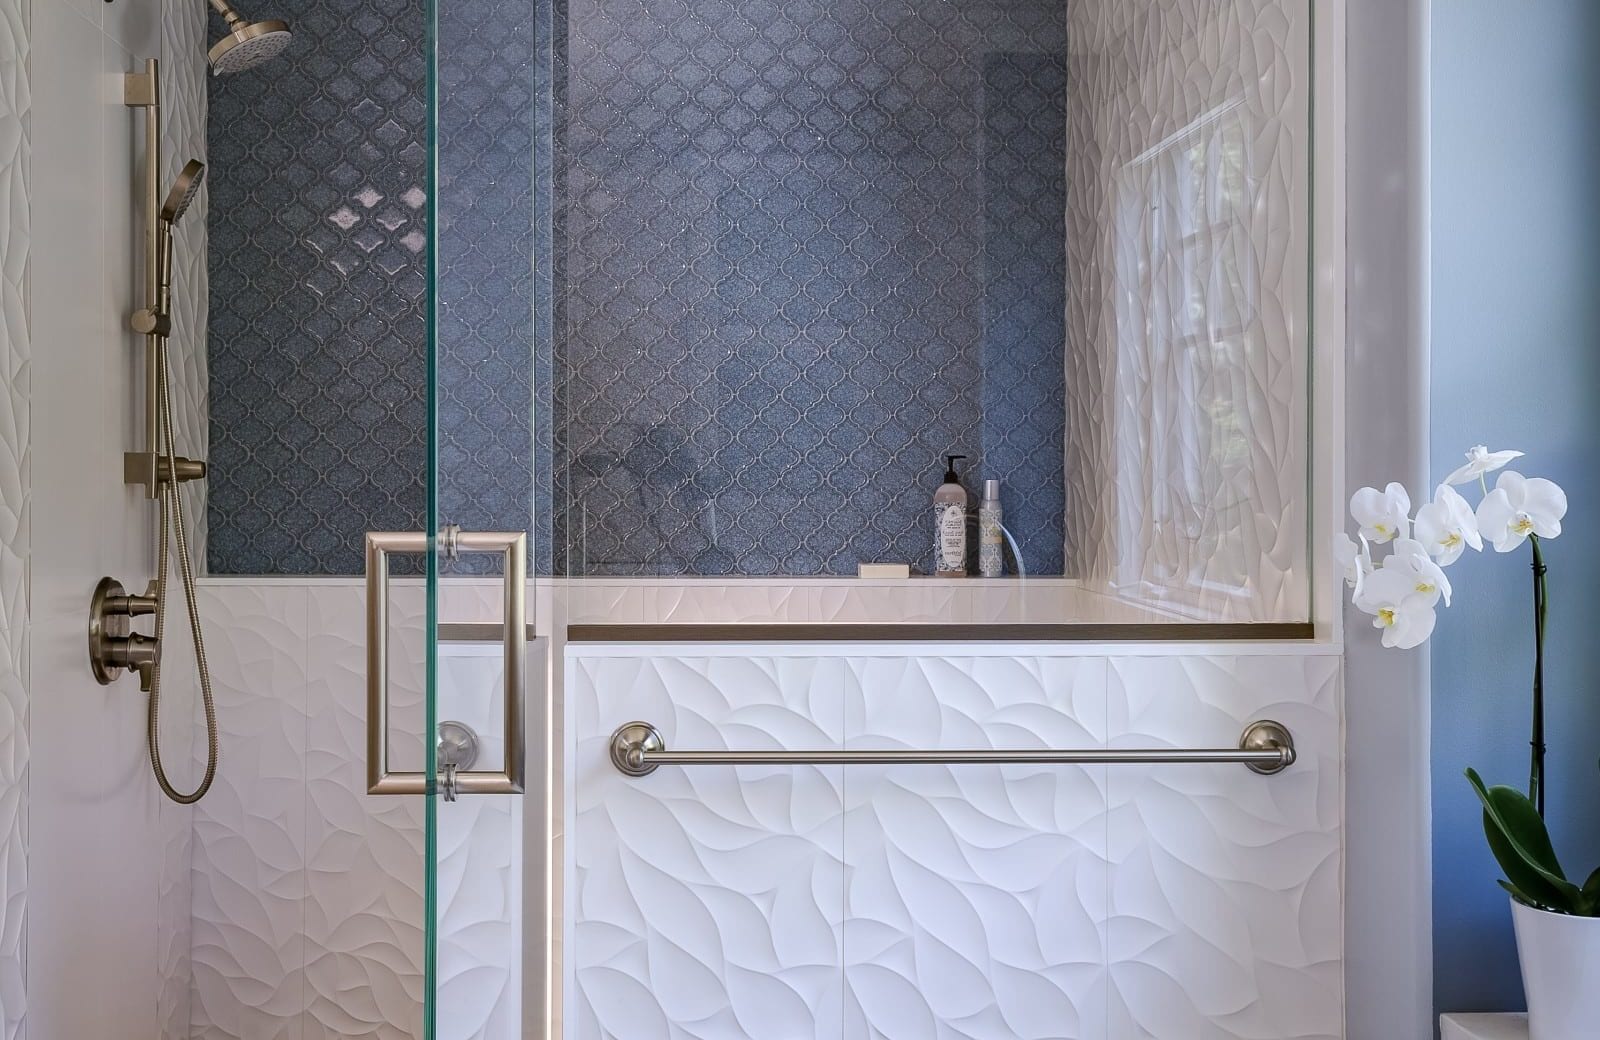 Award Winning Bathroom Remodel Tiled shower